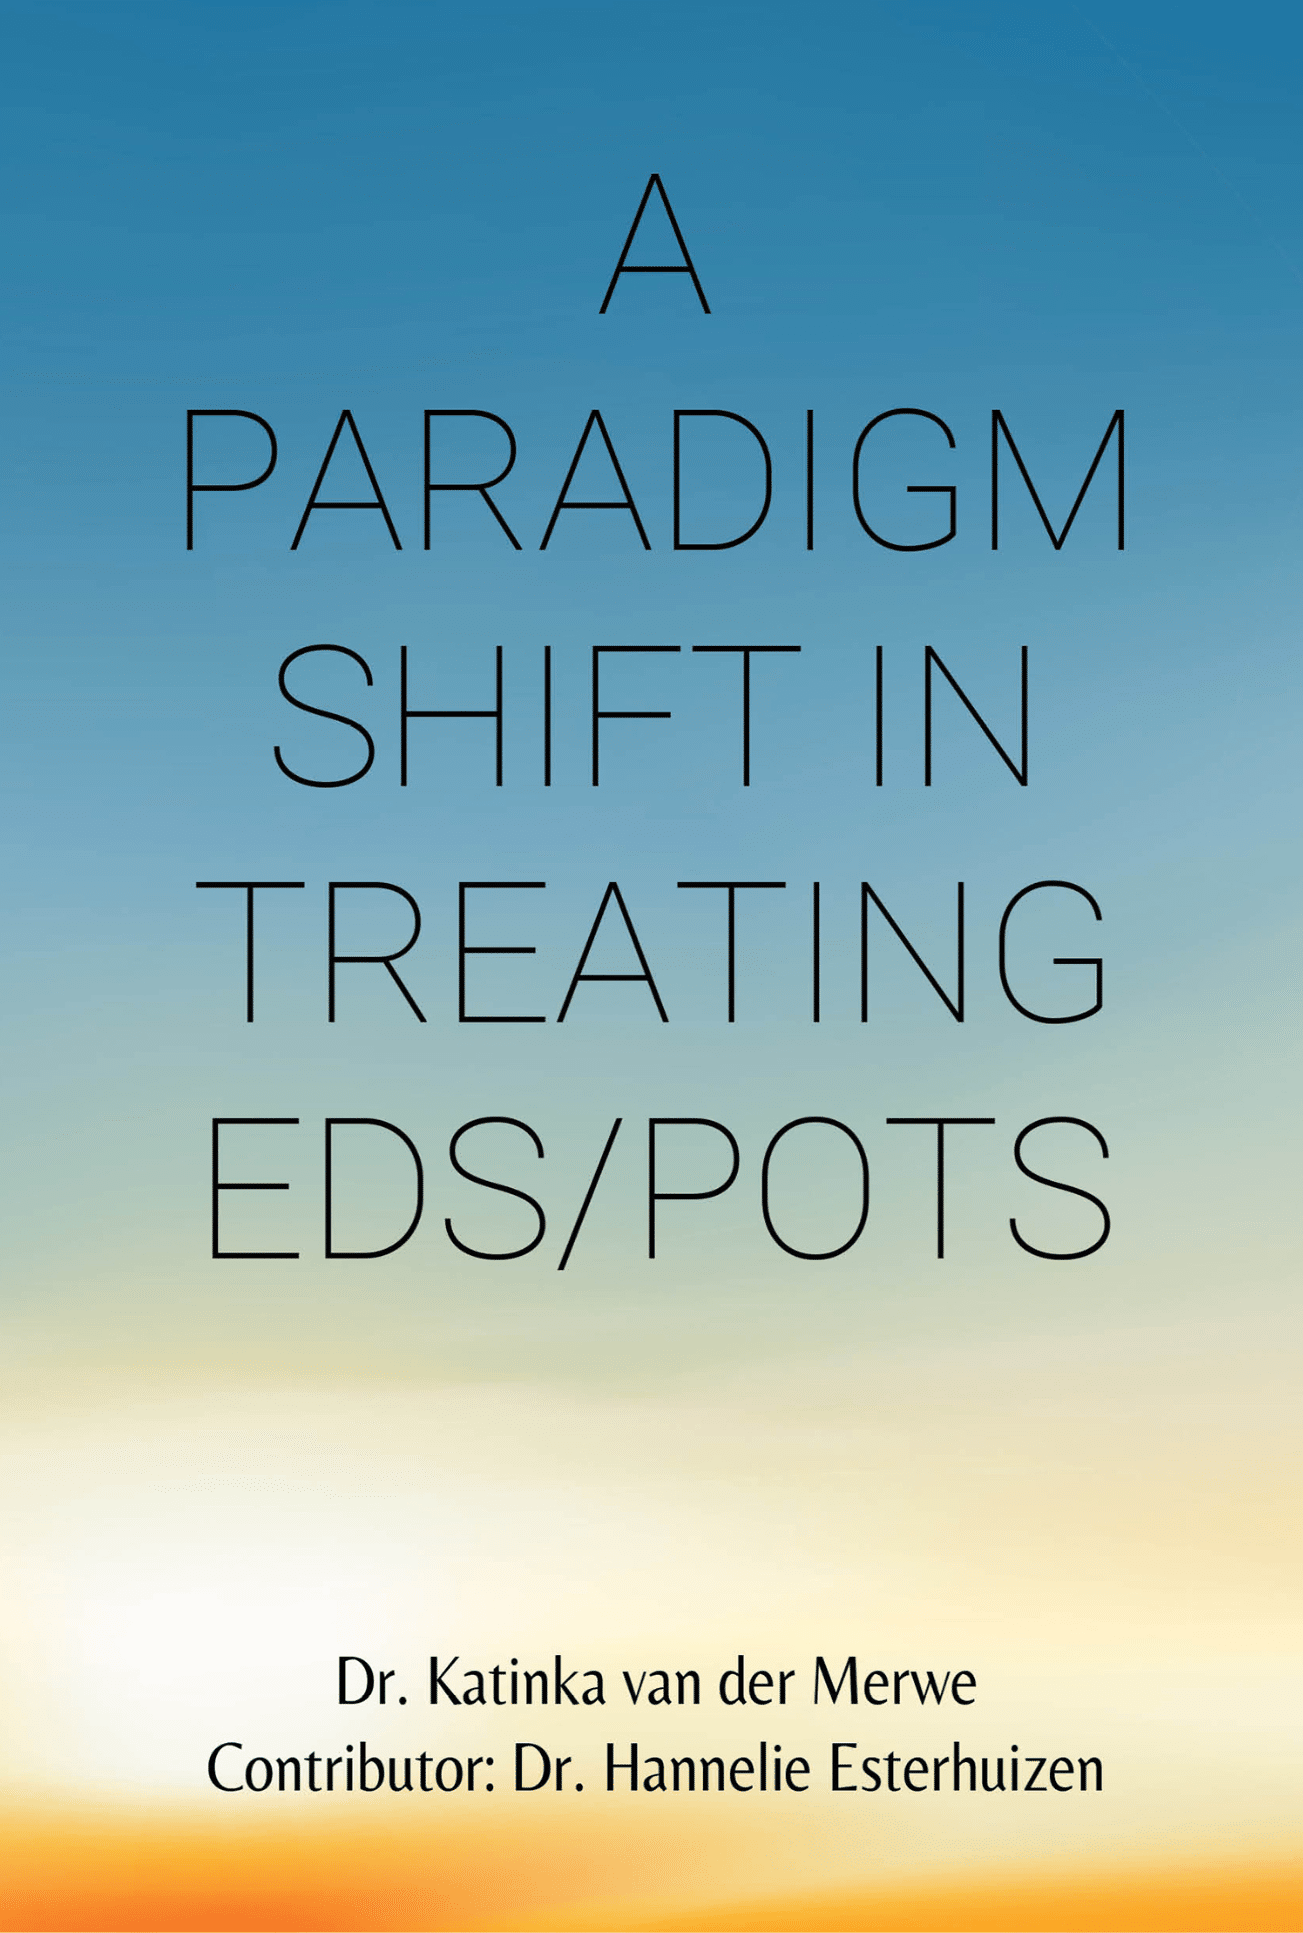 A paradigm Shift in treating EDS & POTS - Dr Katinka van der Merwe - Spero Clinic